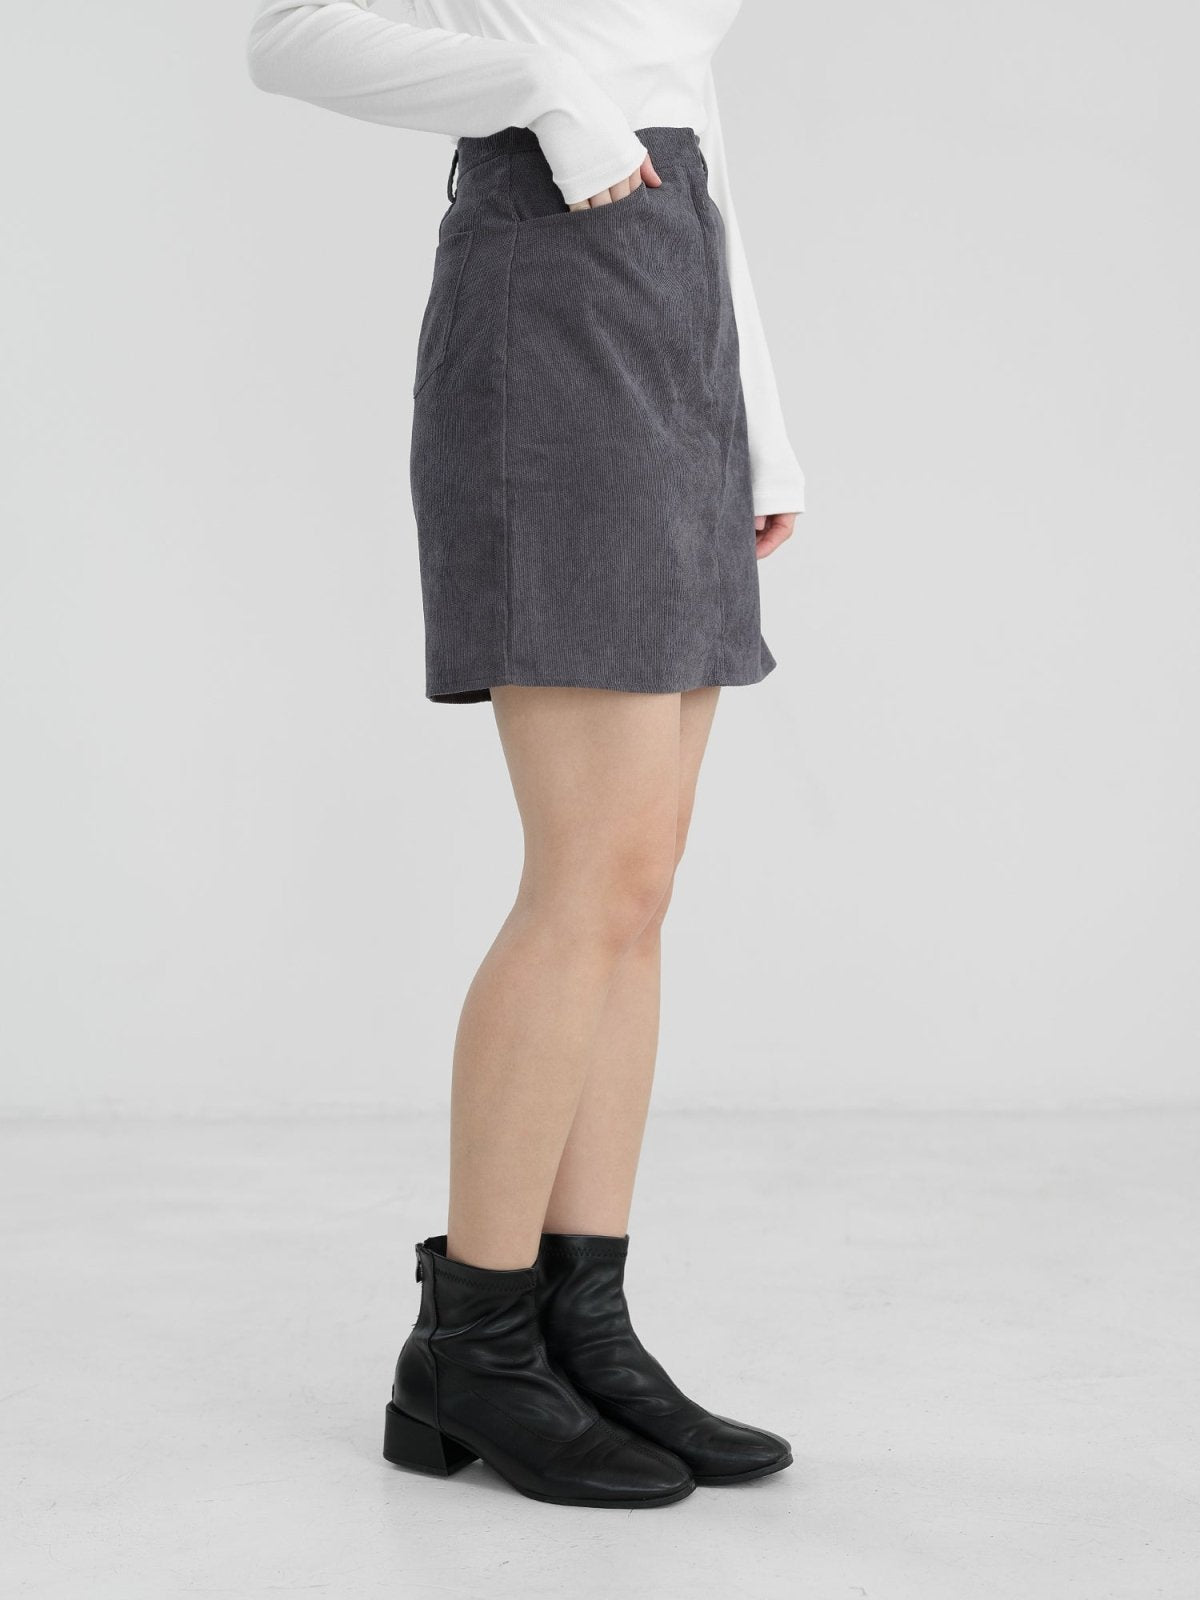 Raven Corduroy Mini Skirt - DAG-DD1266-23CharcoalS - Charcoal - S - D'zage Designs